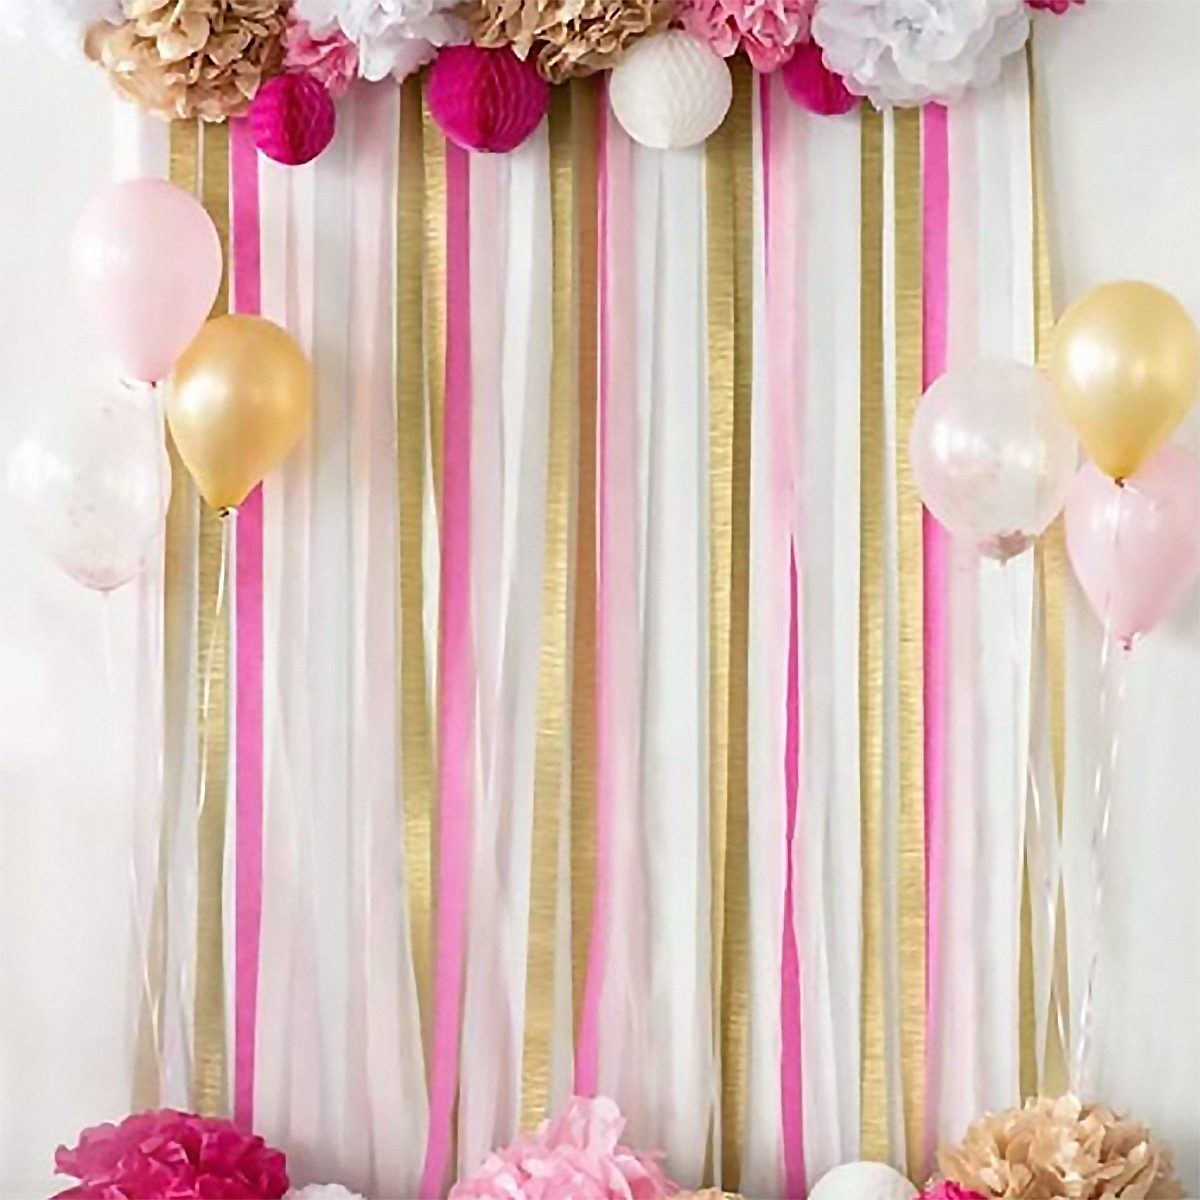 Everything You Need on X: Birthday decoration ideas A thread